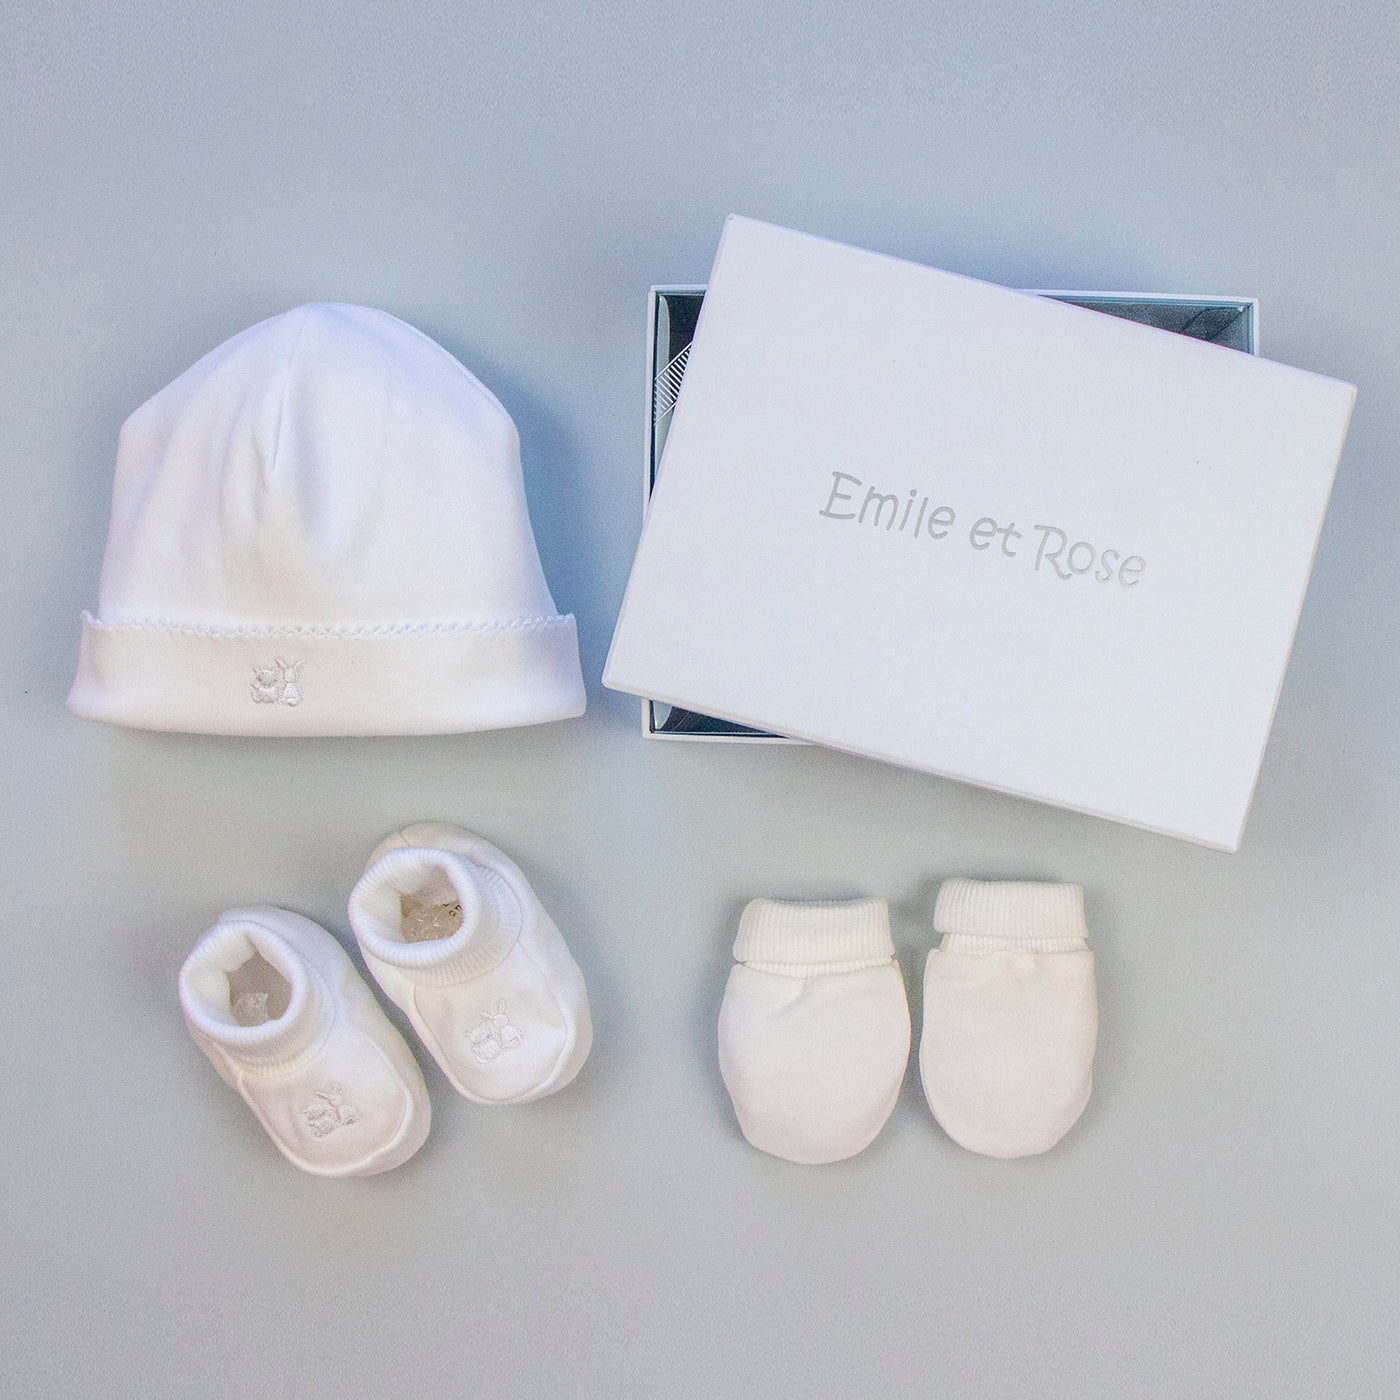 Nox Unisex New Baby Gift Set